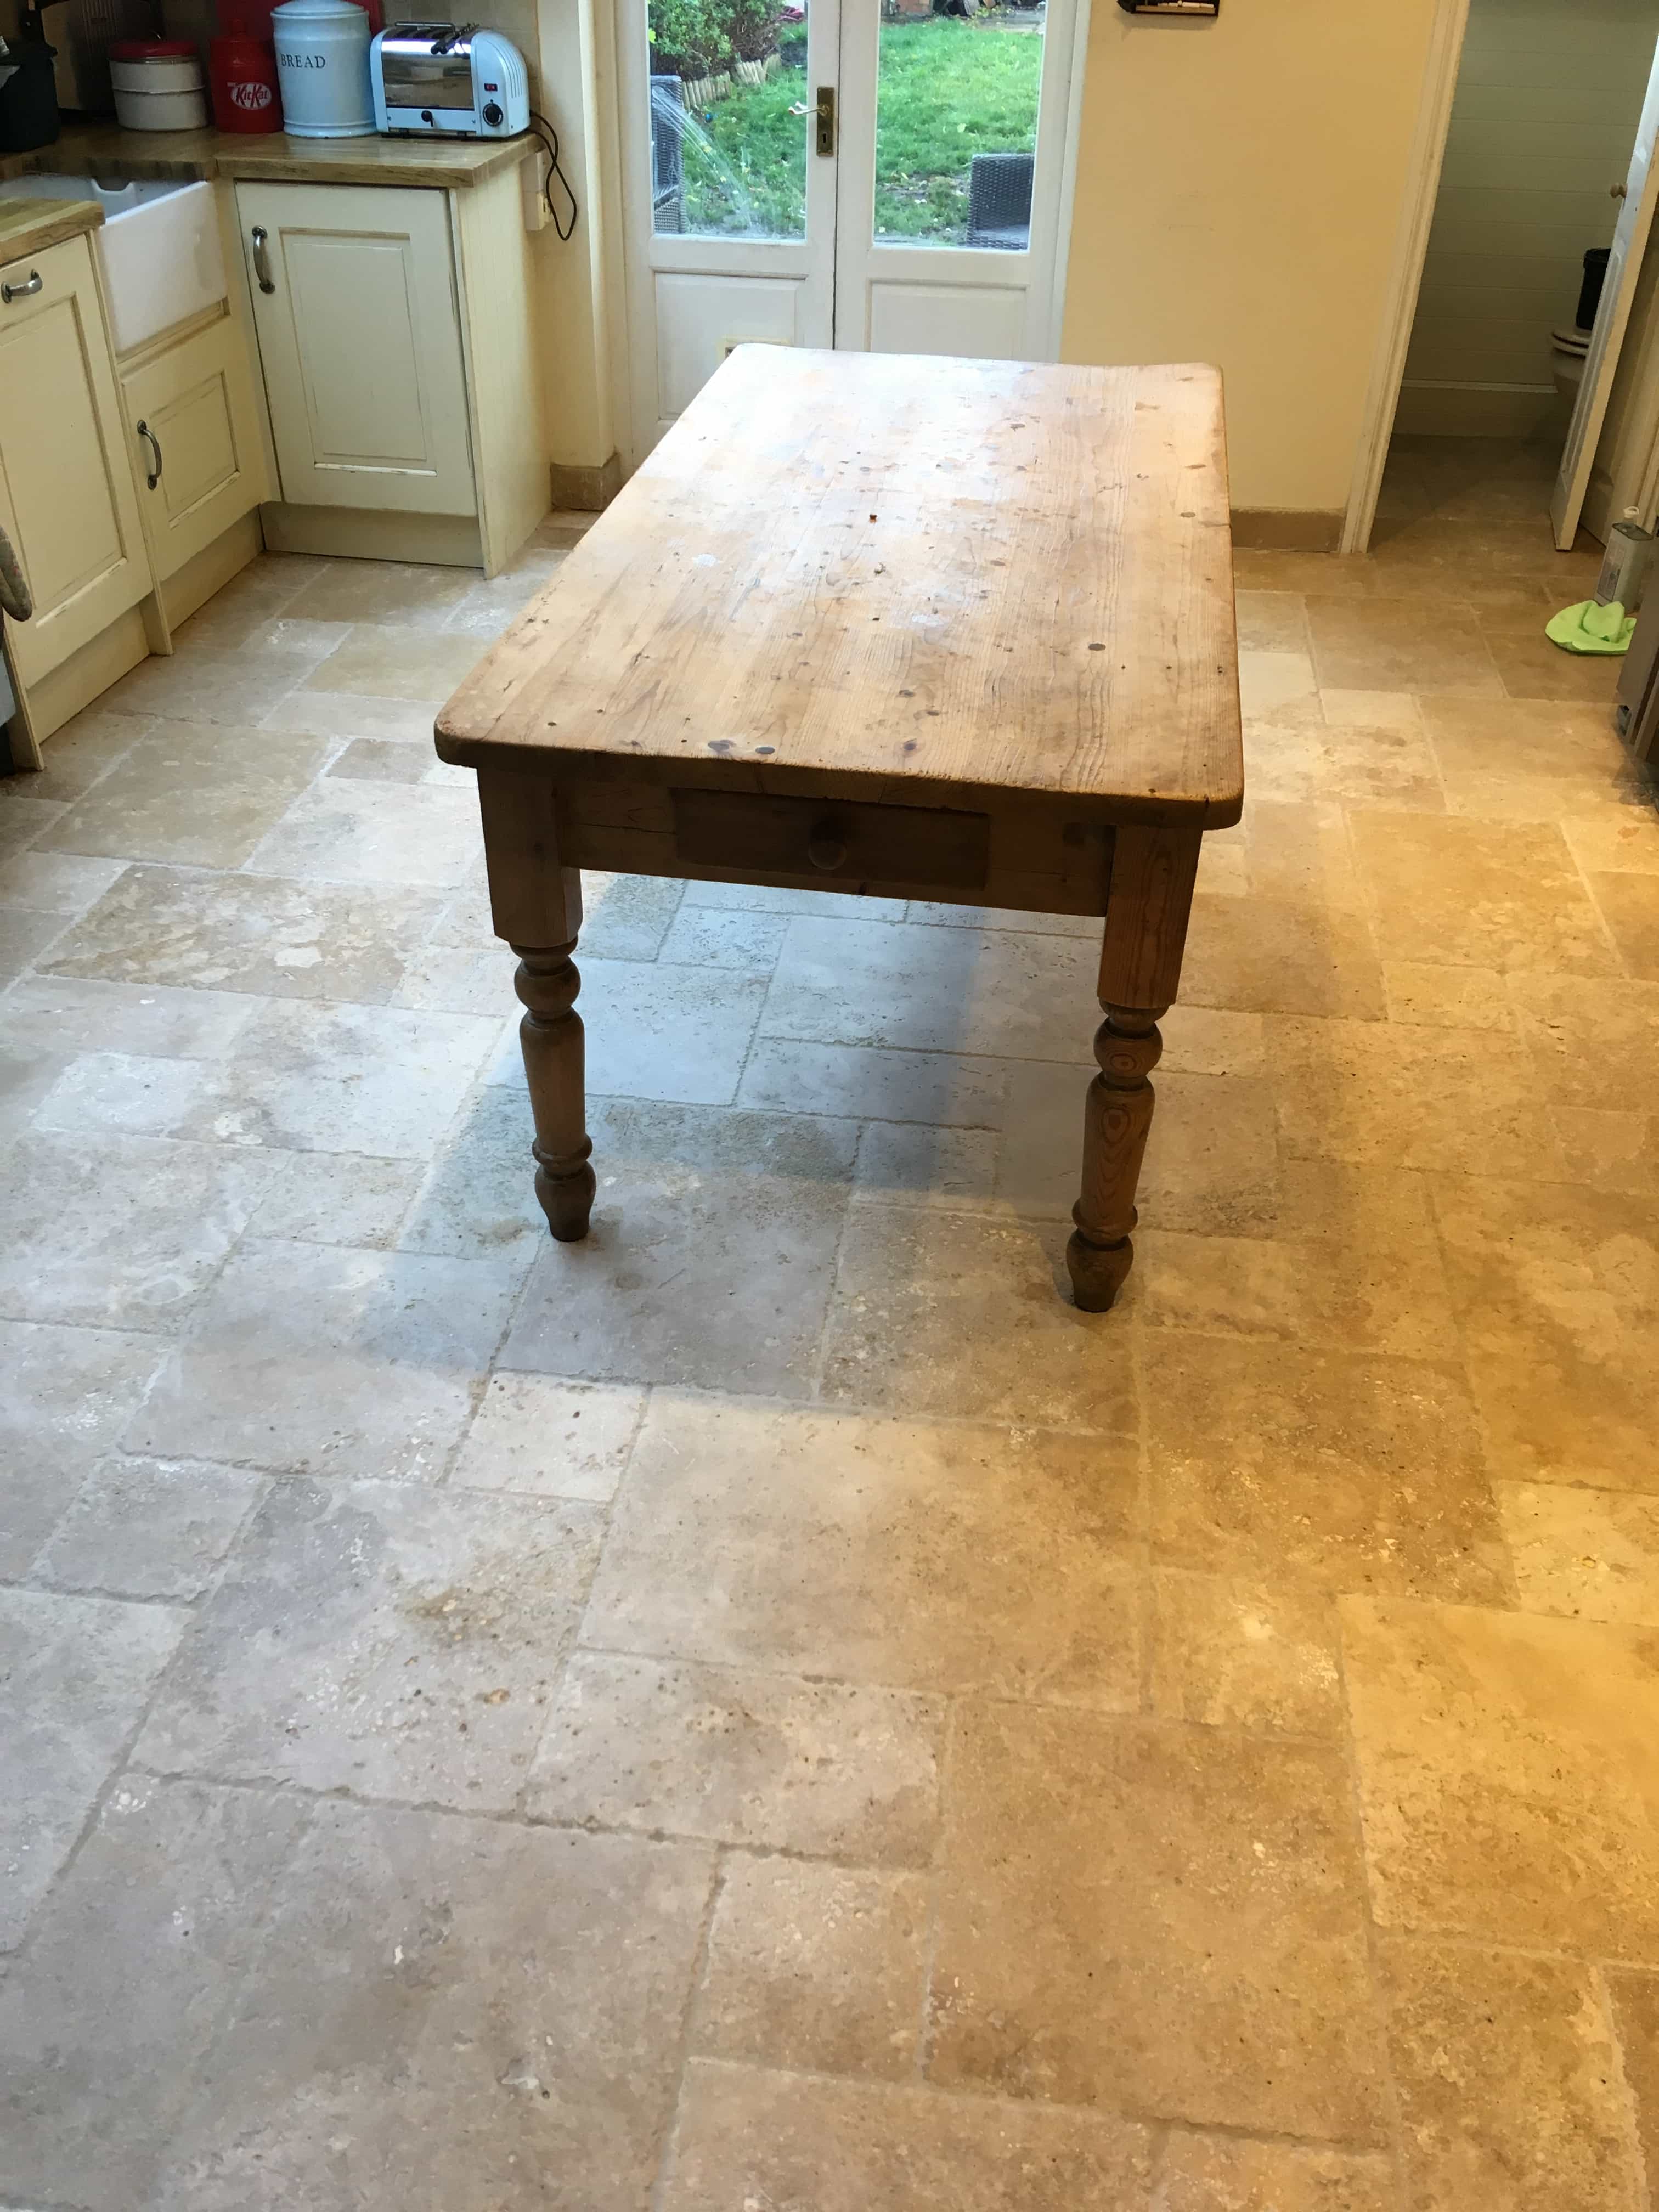 Travertine Tiled Kitchen Floor After Cleaning Shepperton